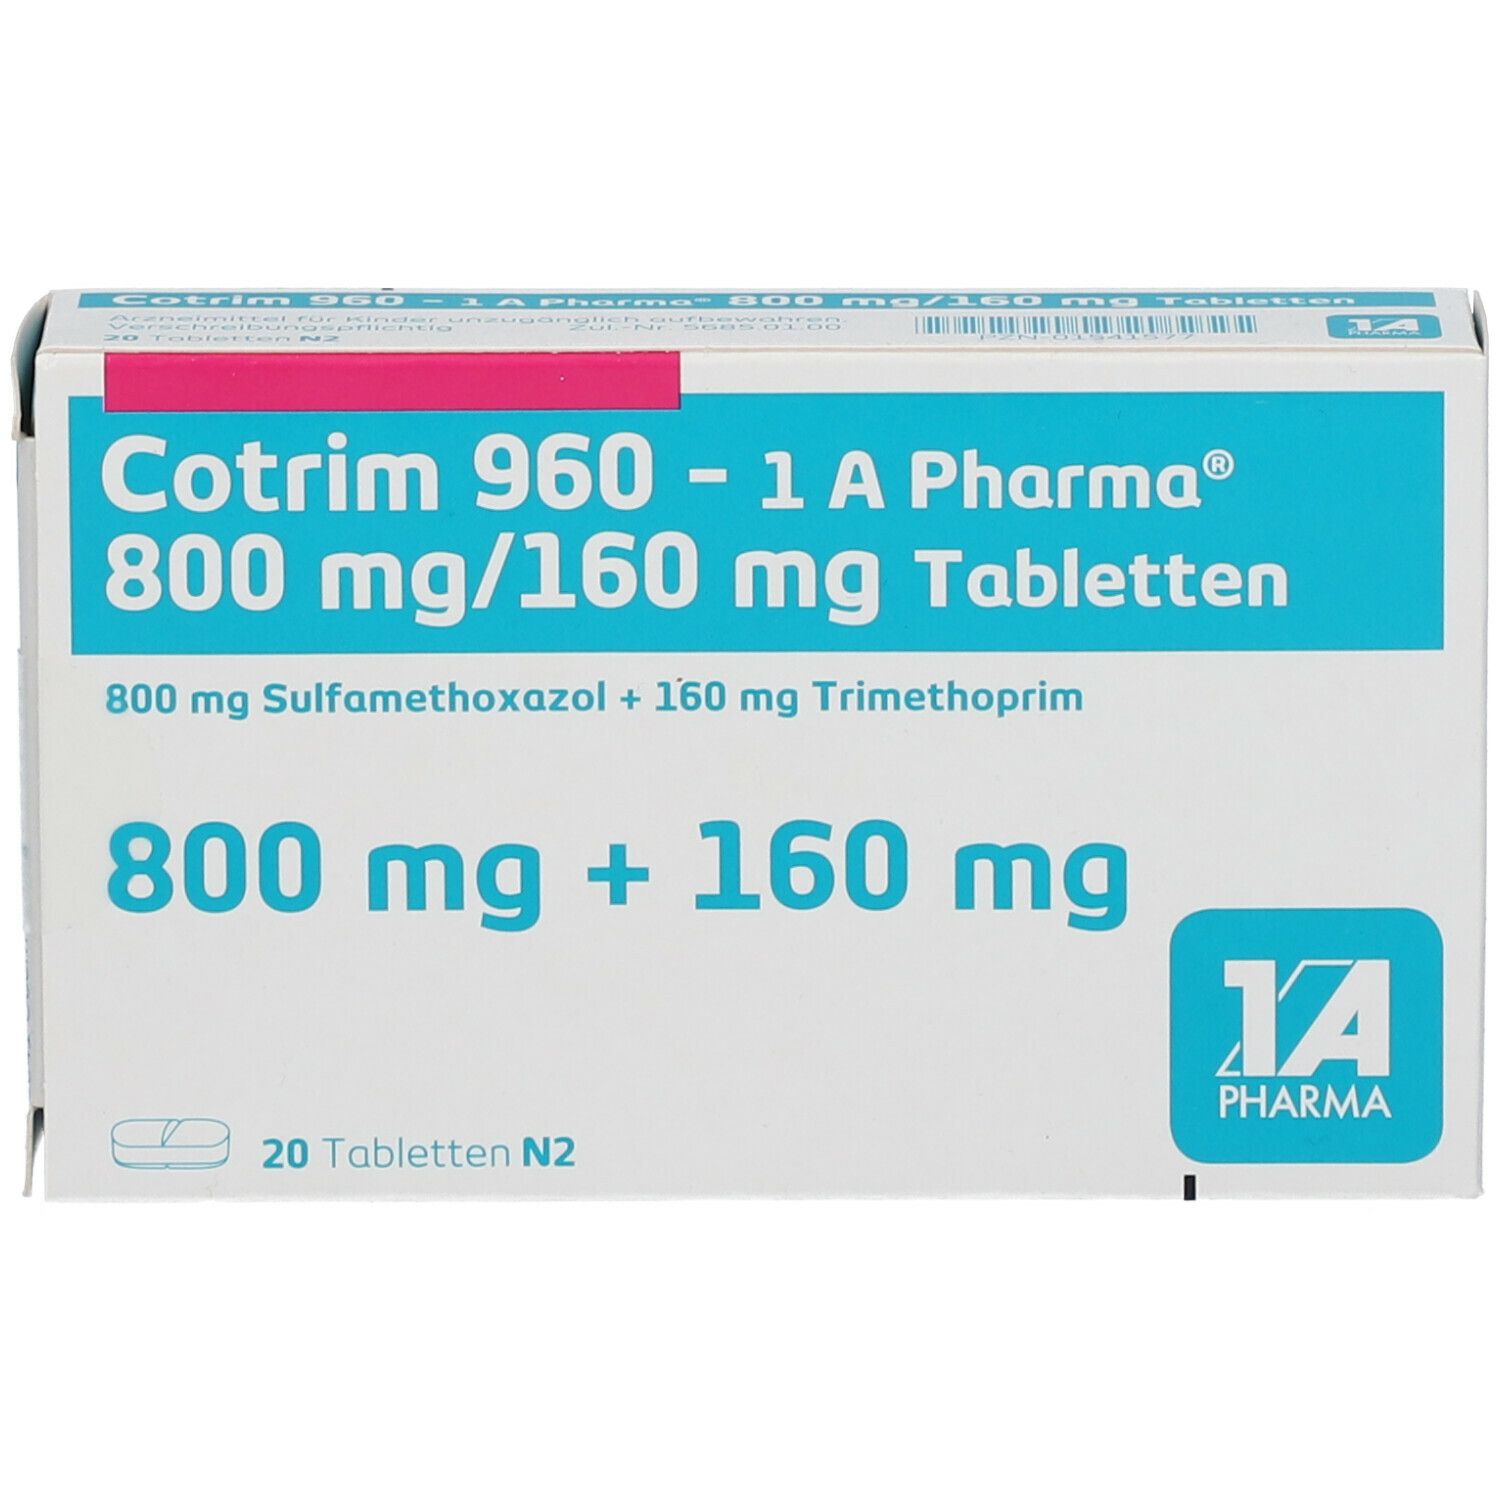 Cotrim 960 1A Pharma®